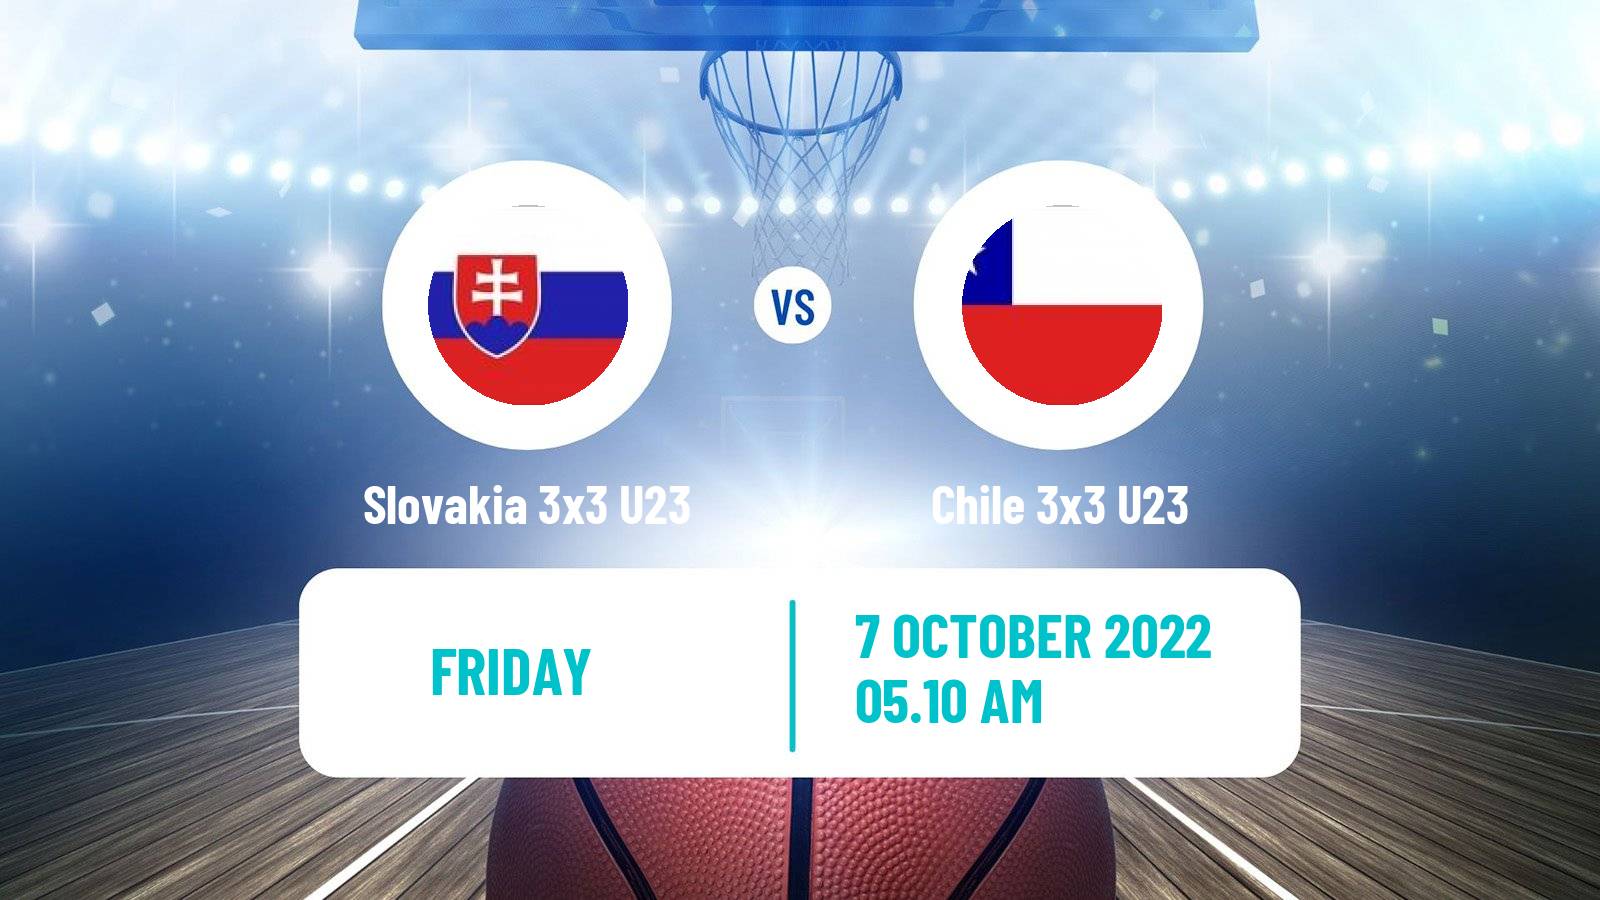 Basketball World Cup Basketball 3x3 U23 Slovakia 3x3 U23 - Chile 3x3 U23